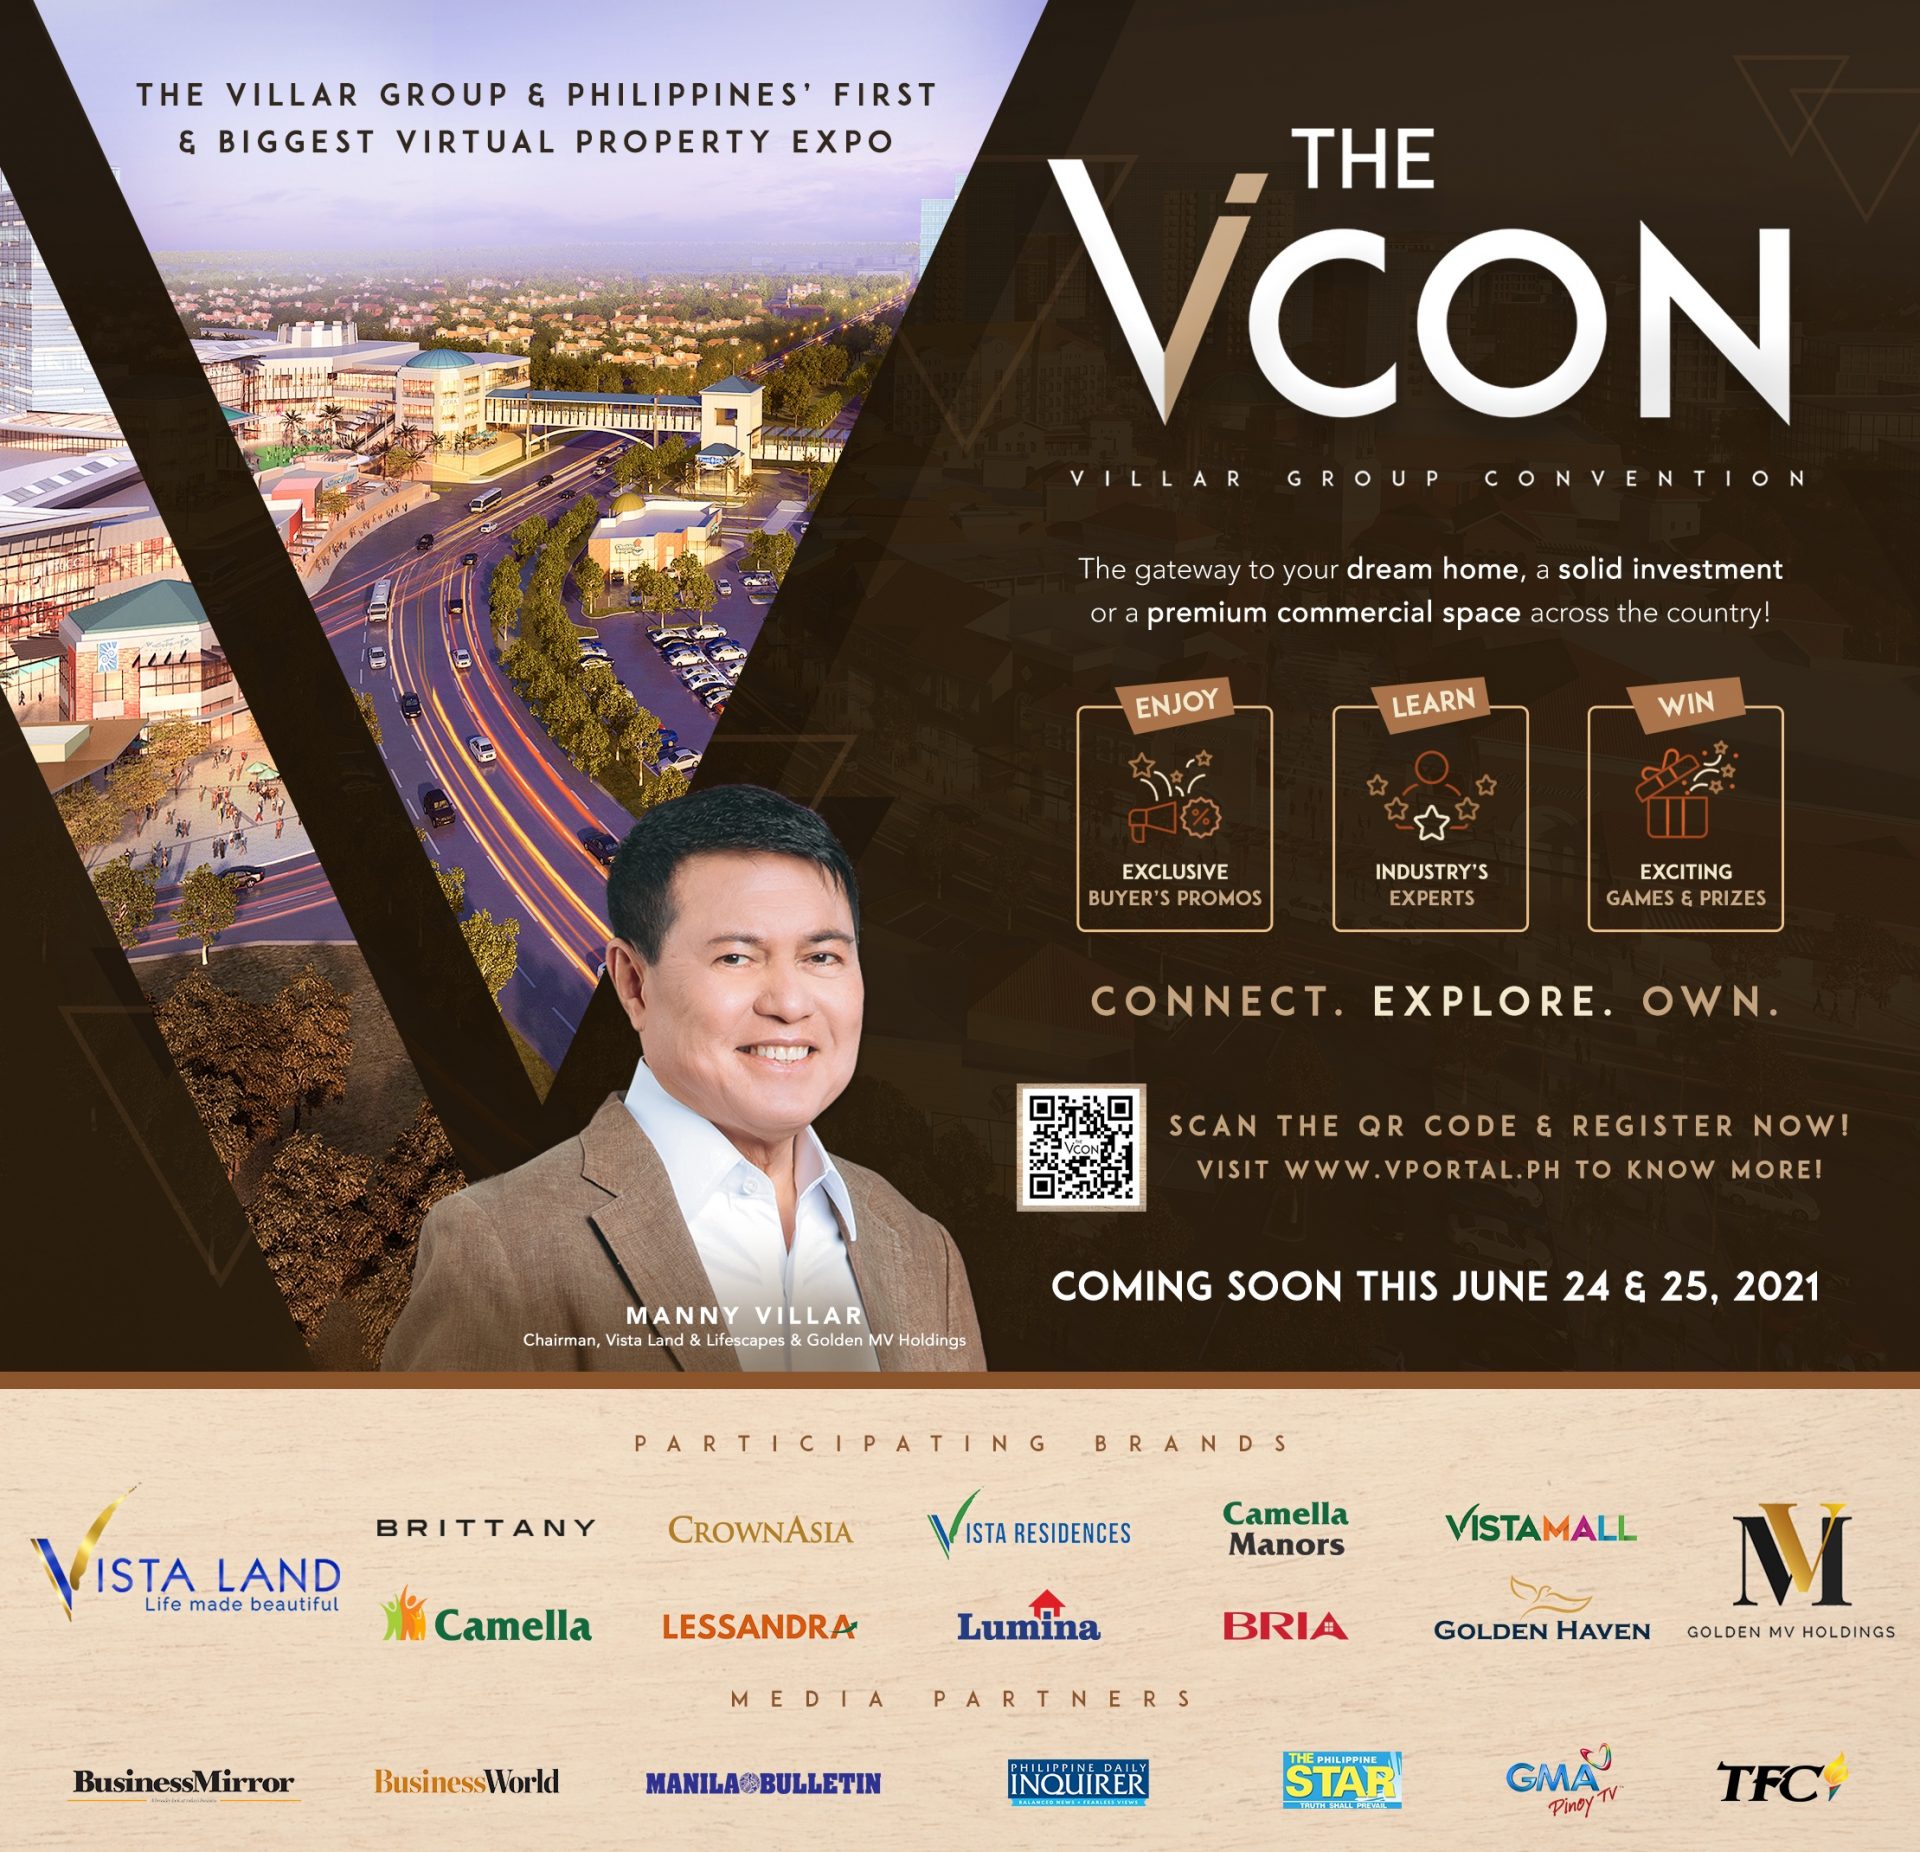 The ViCon Villar Group Convention